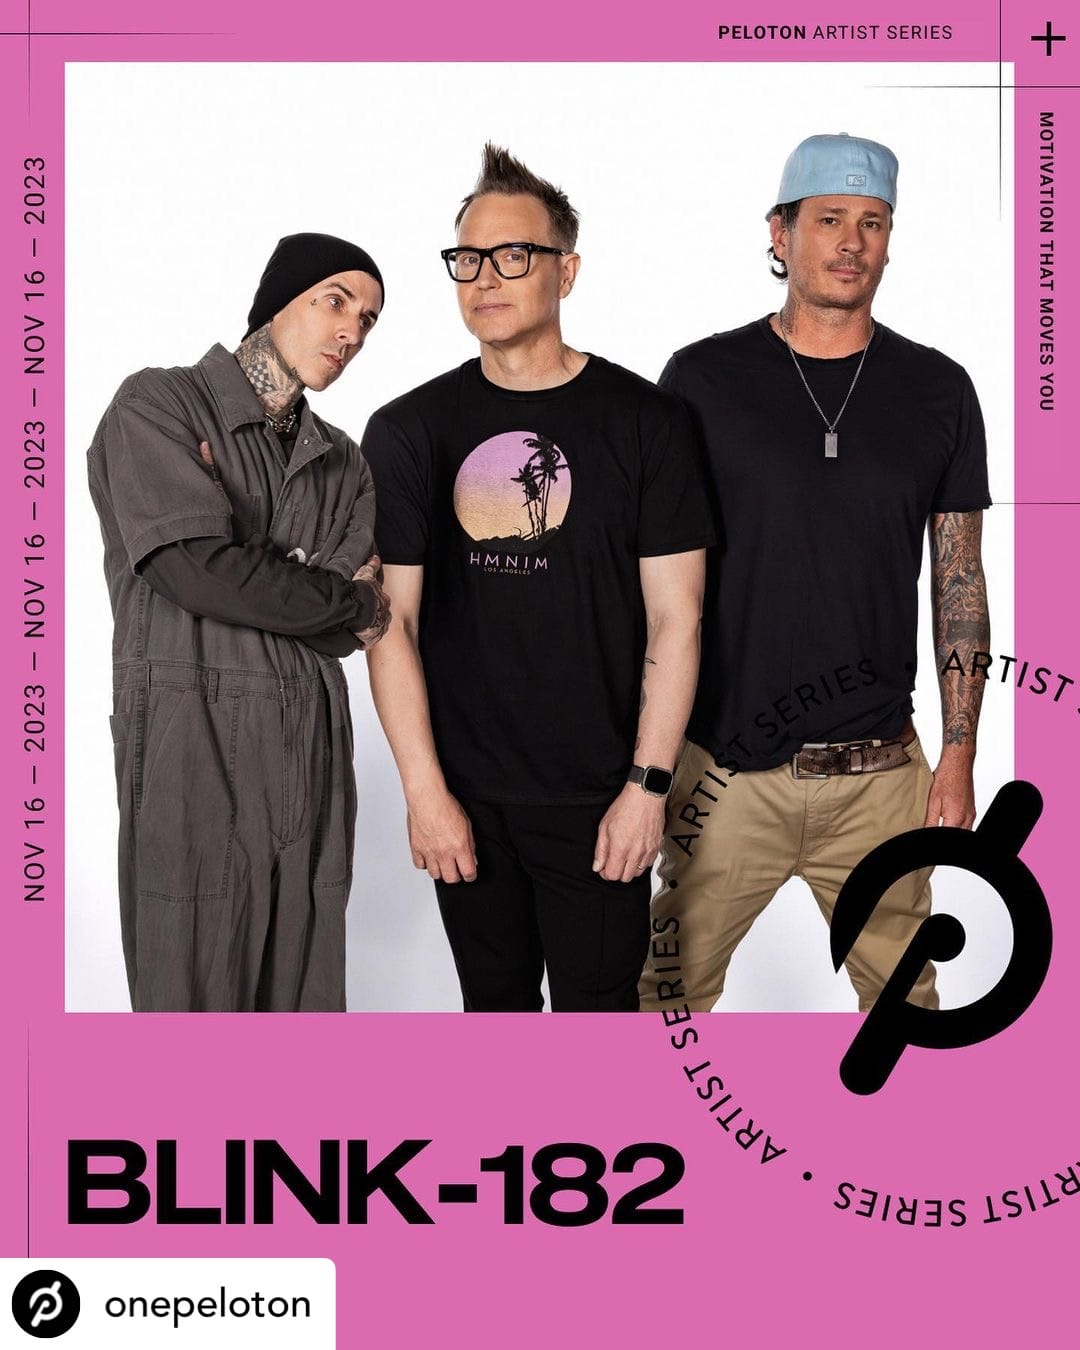 Blink-182 Peloton artist series classes. Image credit @onepeloton